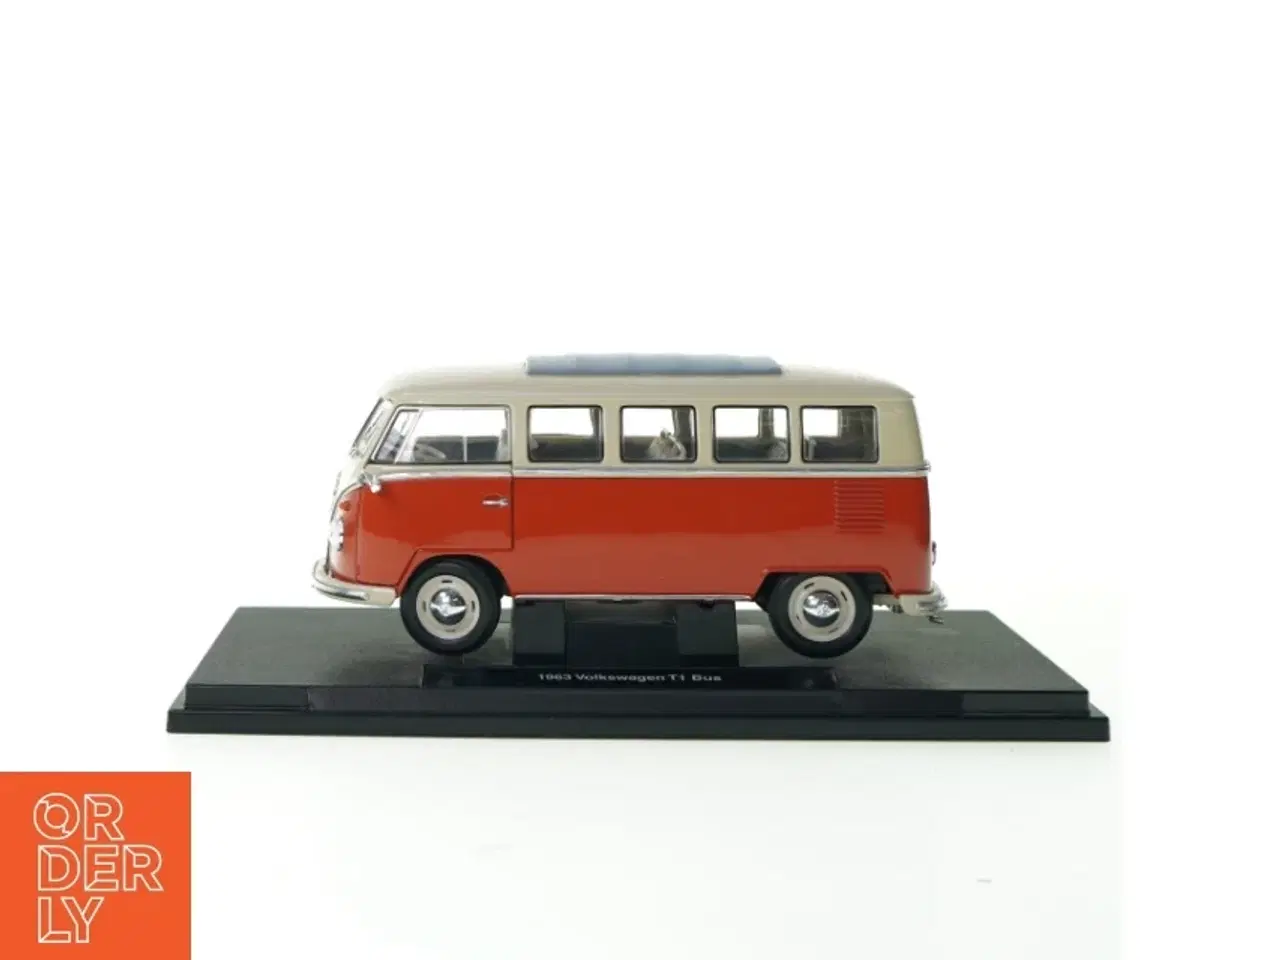 Billede 1 - 1963 Volkswagen T1 bus fra Welly (str. 33 x 16 x 14 cm)